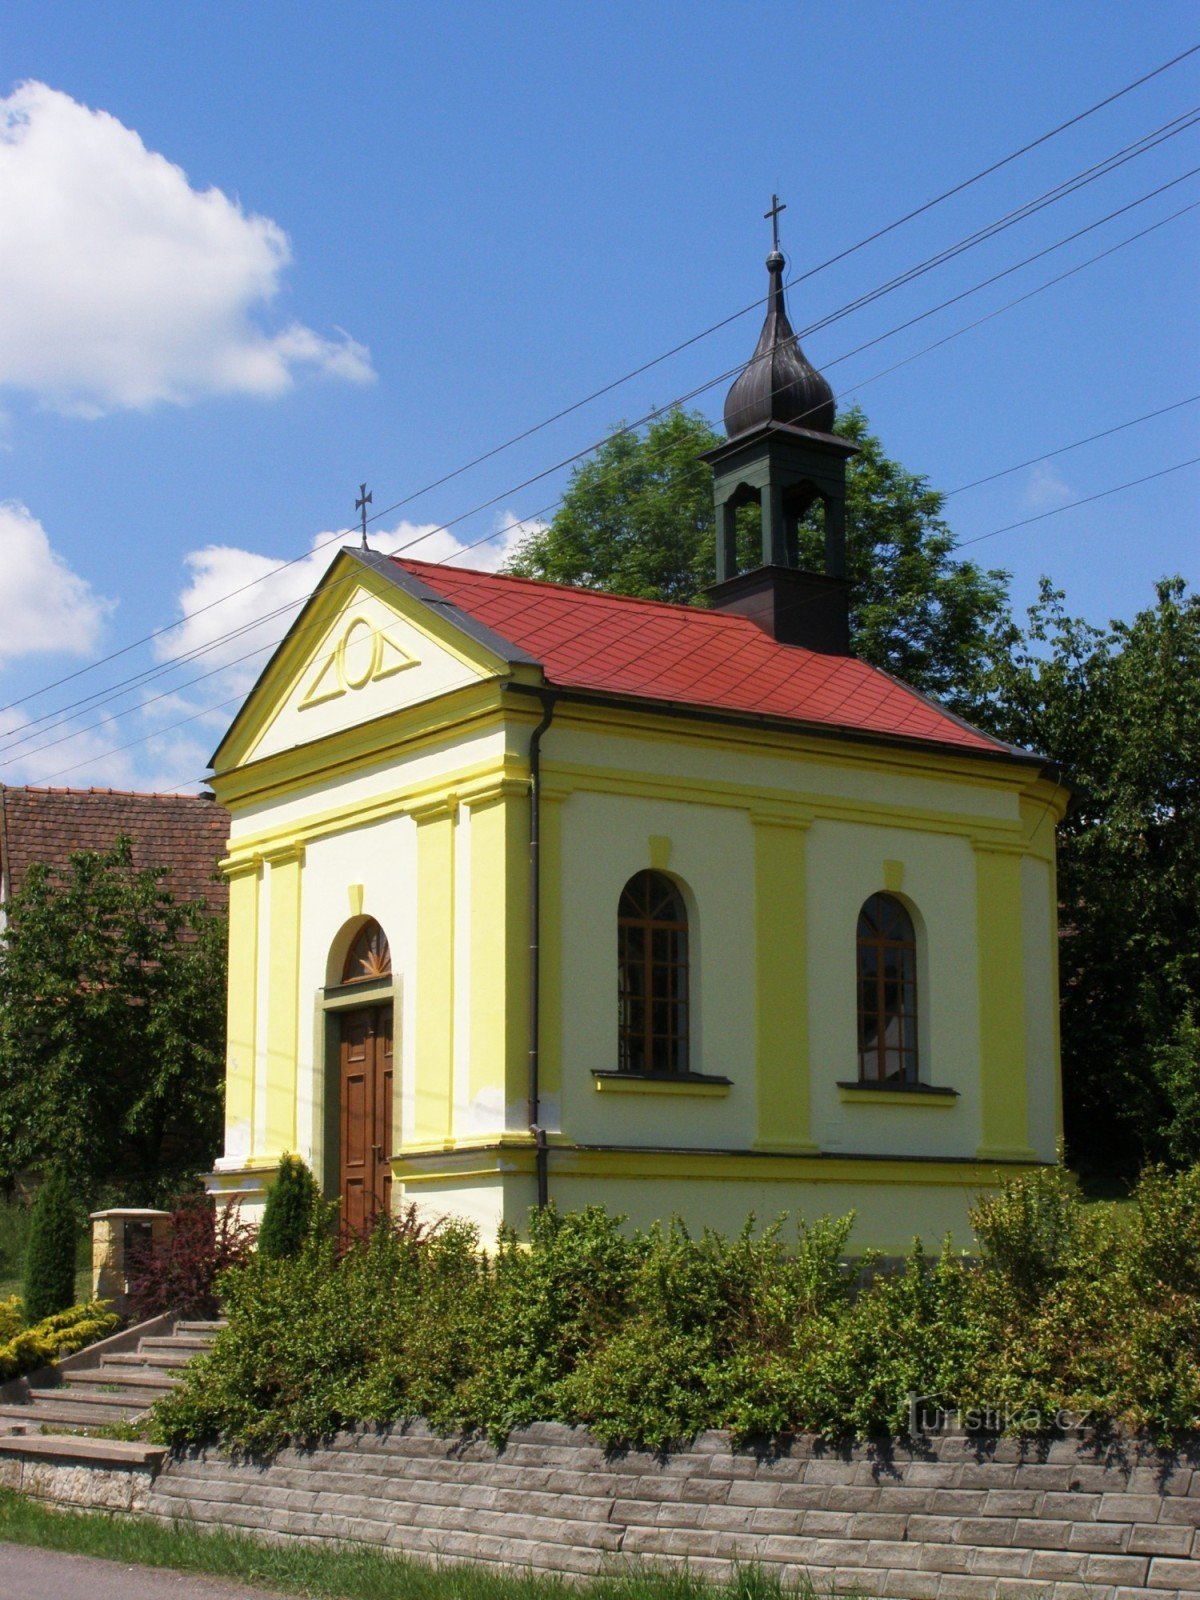 Slemeno - 圣教堂约瑟夫